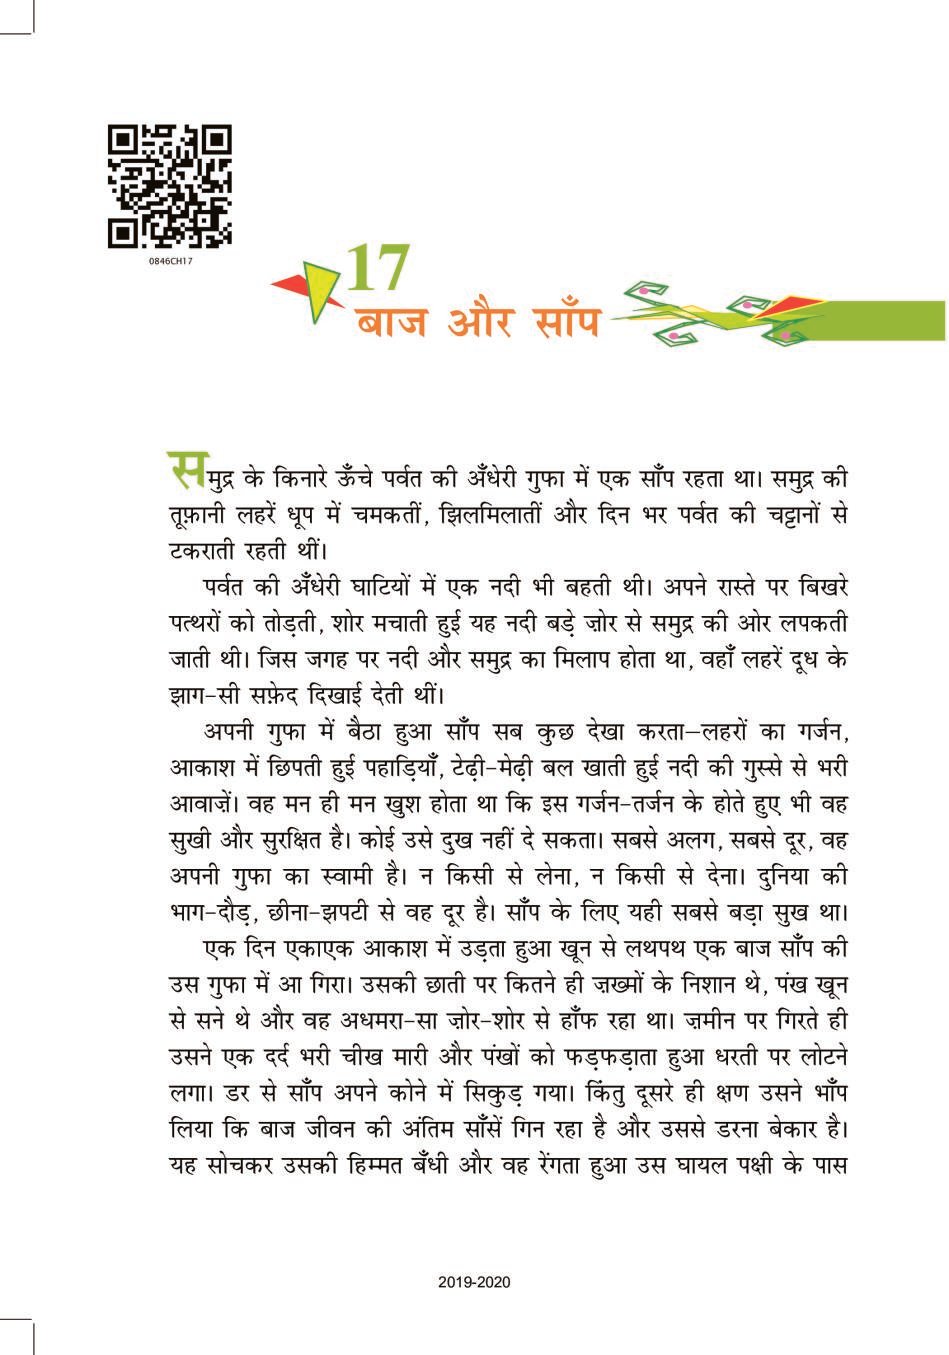 NCERT Book Class 8 Hindi (वसंत) Chapter 17 बाज और सांप - Page 1